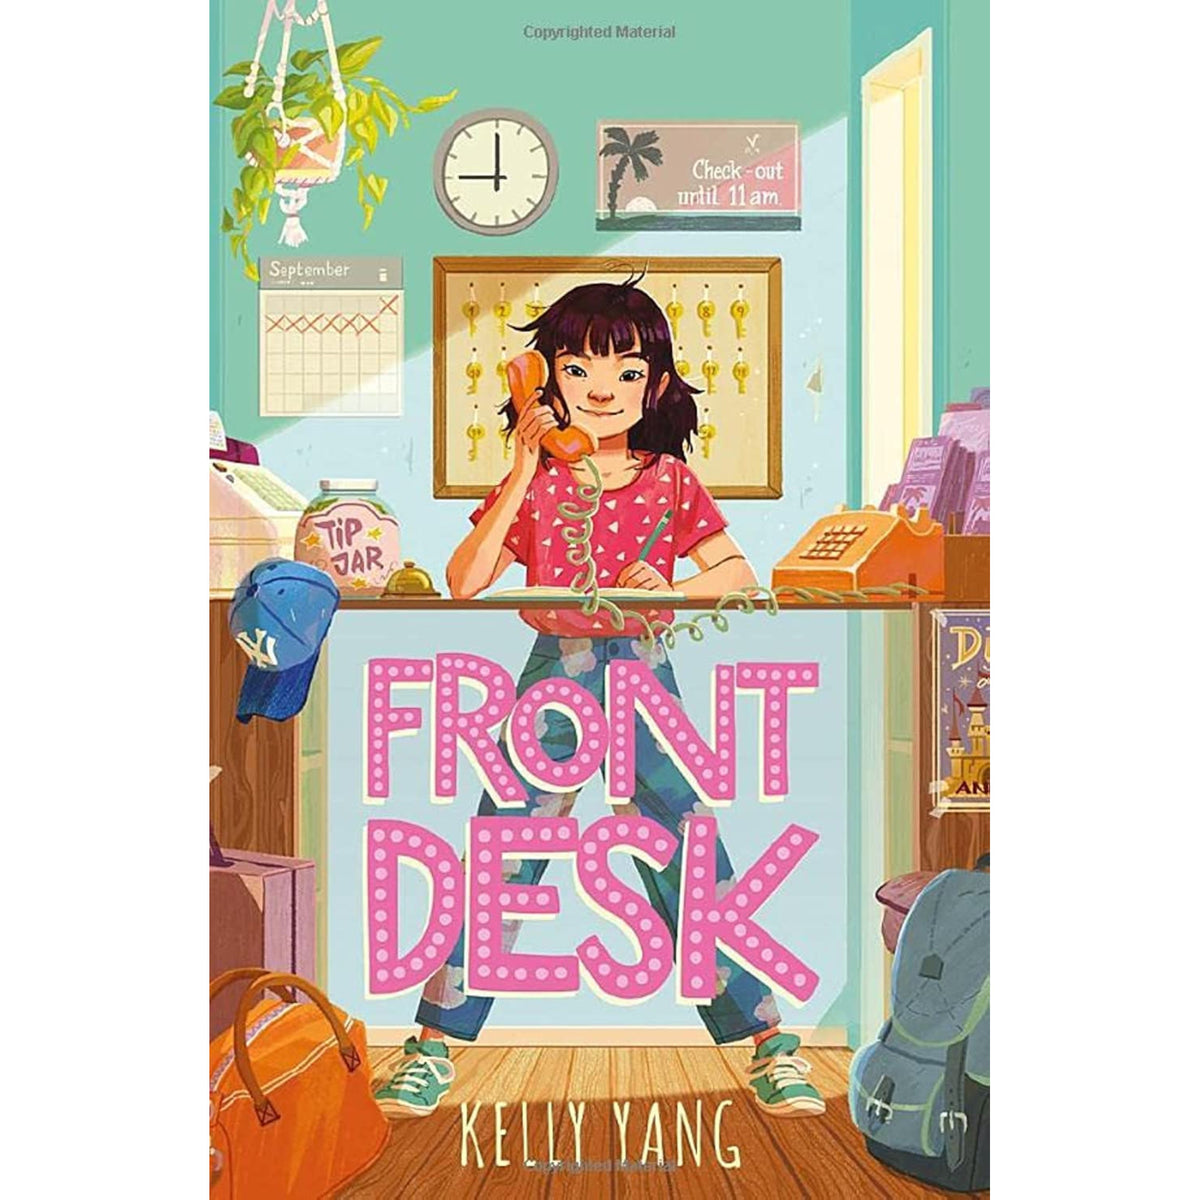 Front Desk